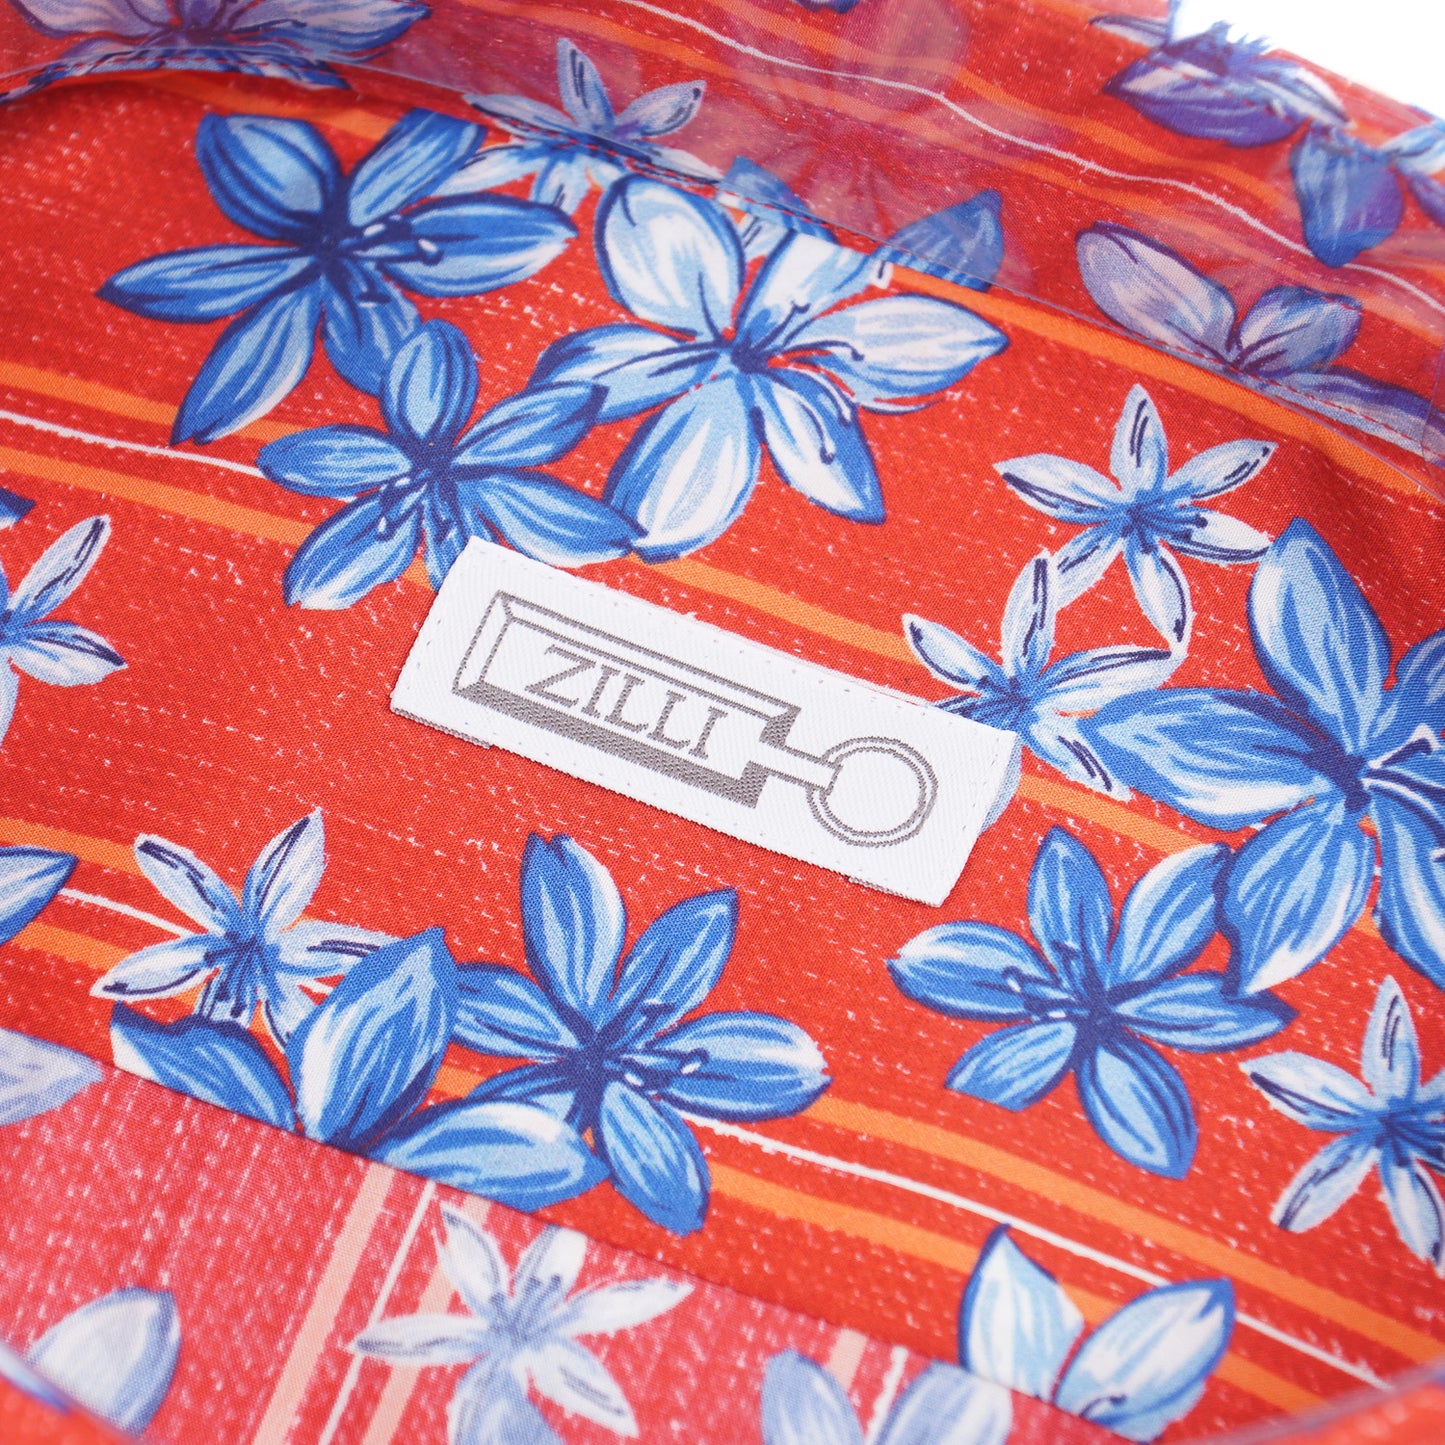 Zilli Short-Sleeve Shirt with Floral Print - Top Shelf Apparel